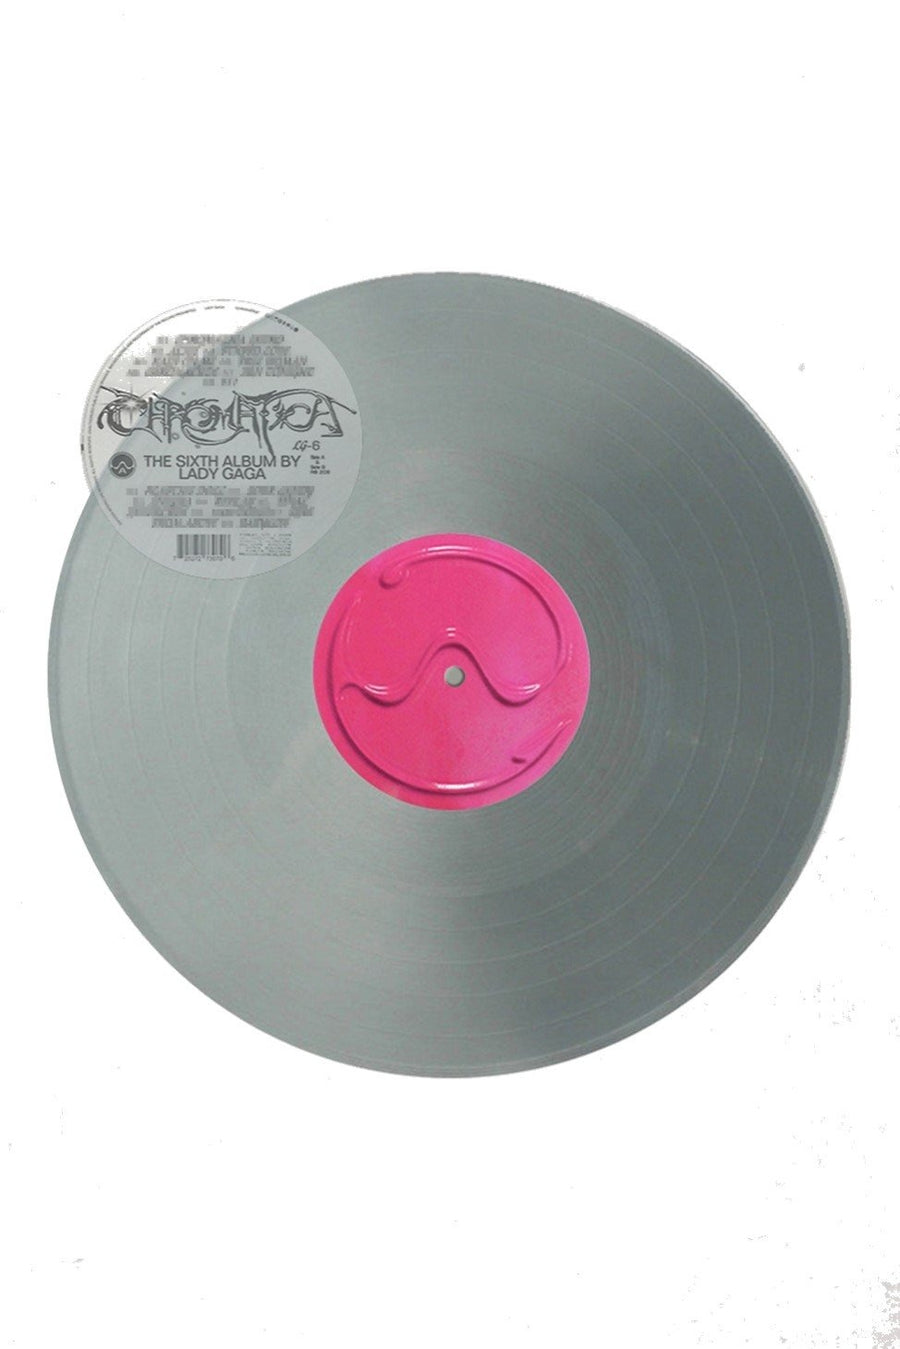 Lady Gaga - Chromatica Exclusive Silver Vinyl Limited Edition